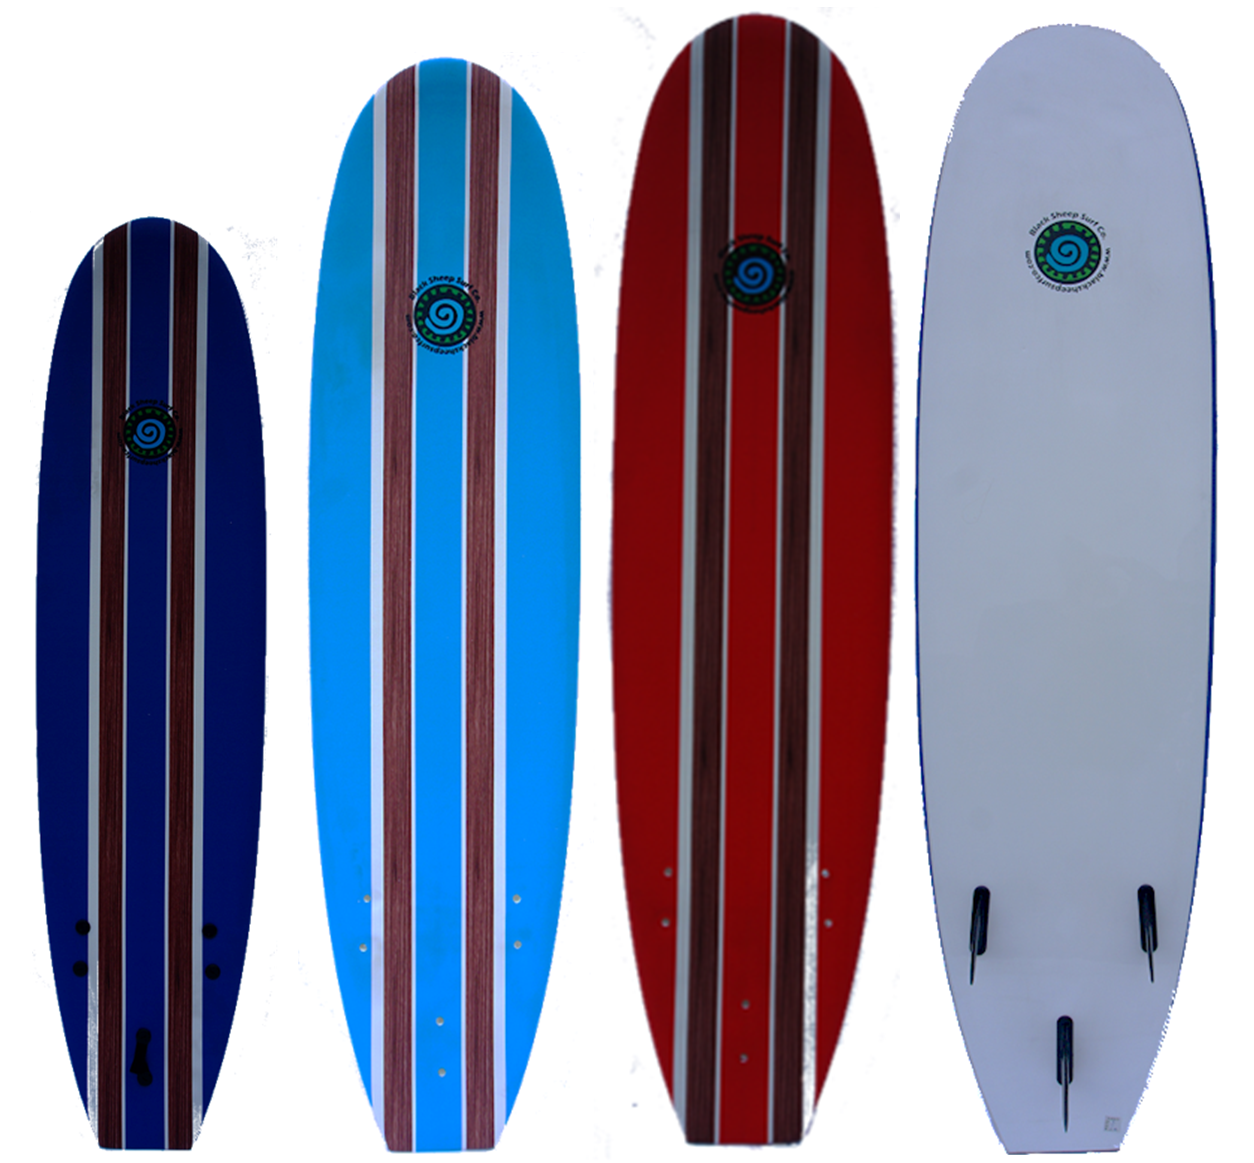 black-sheep-surf-co-softboard-surfboard-range-red-navy-blue-wooden-stripes--galway-surfing-surf-learner-beginner